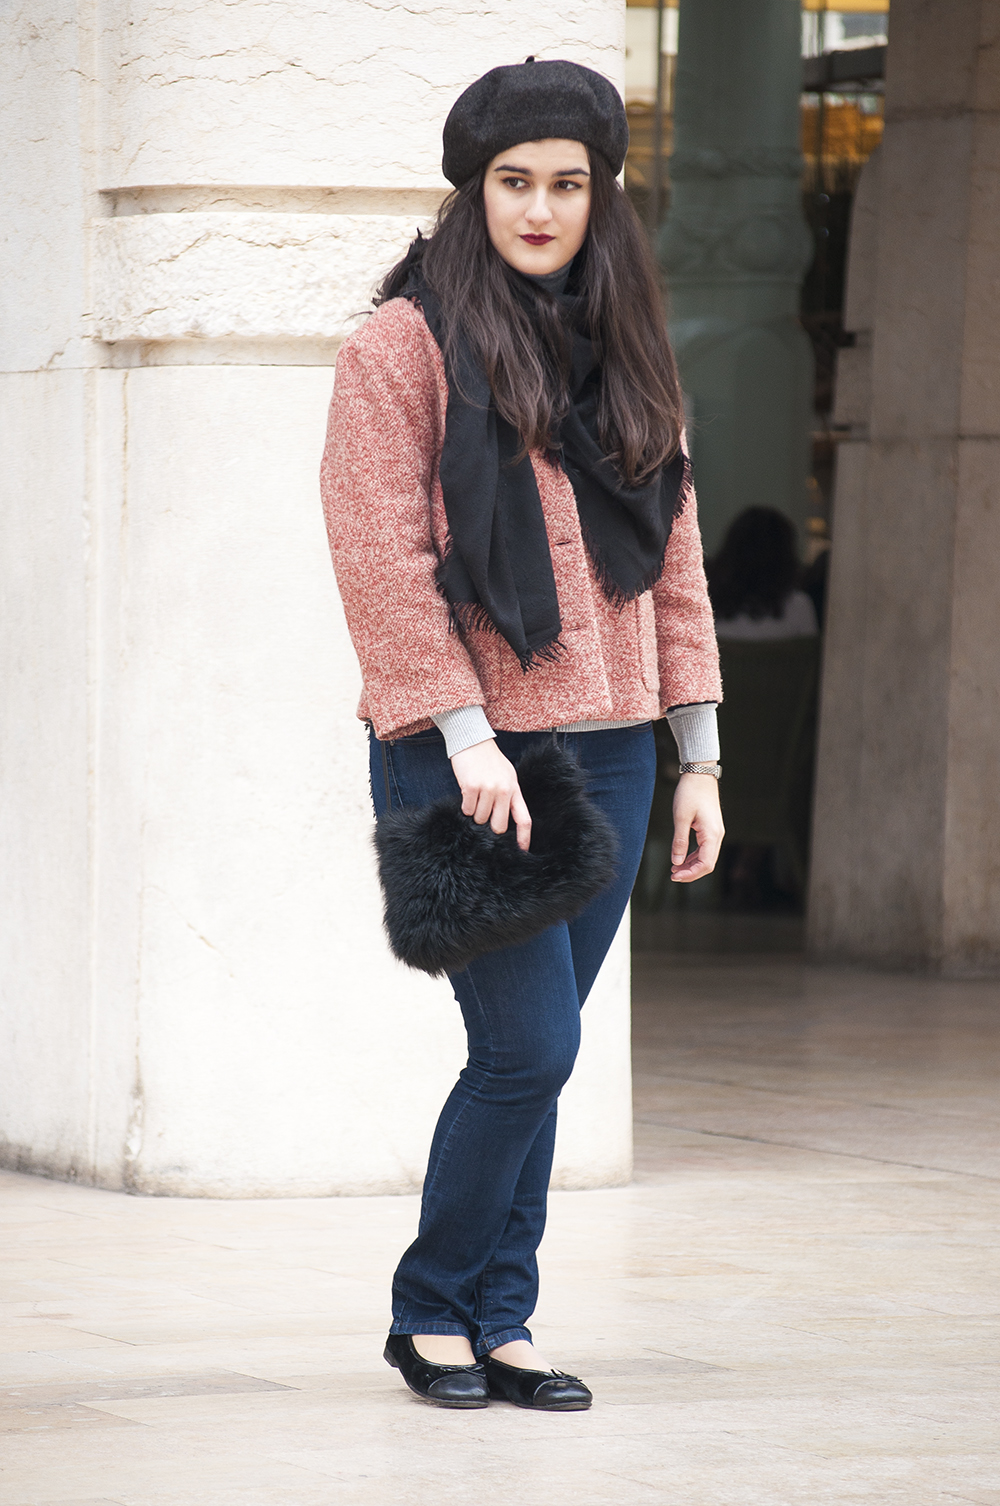 valencia fashion blogger spain somethingfashion outfit winter dailyDSC_0575